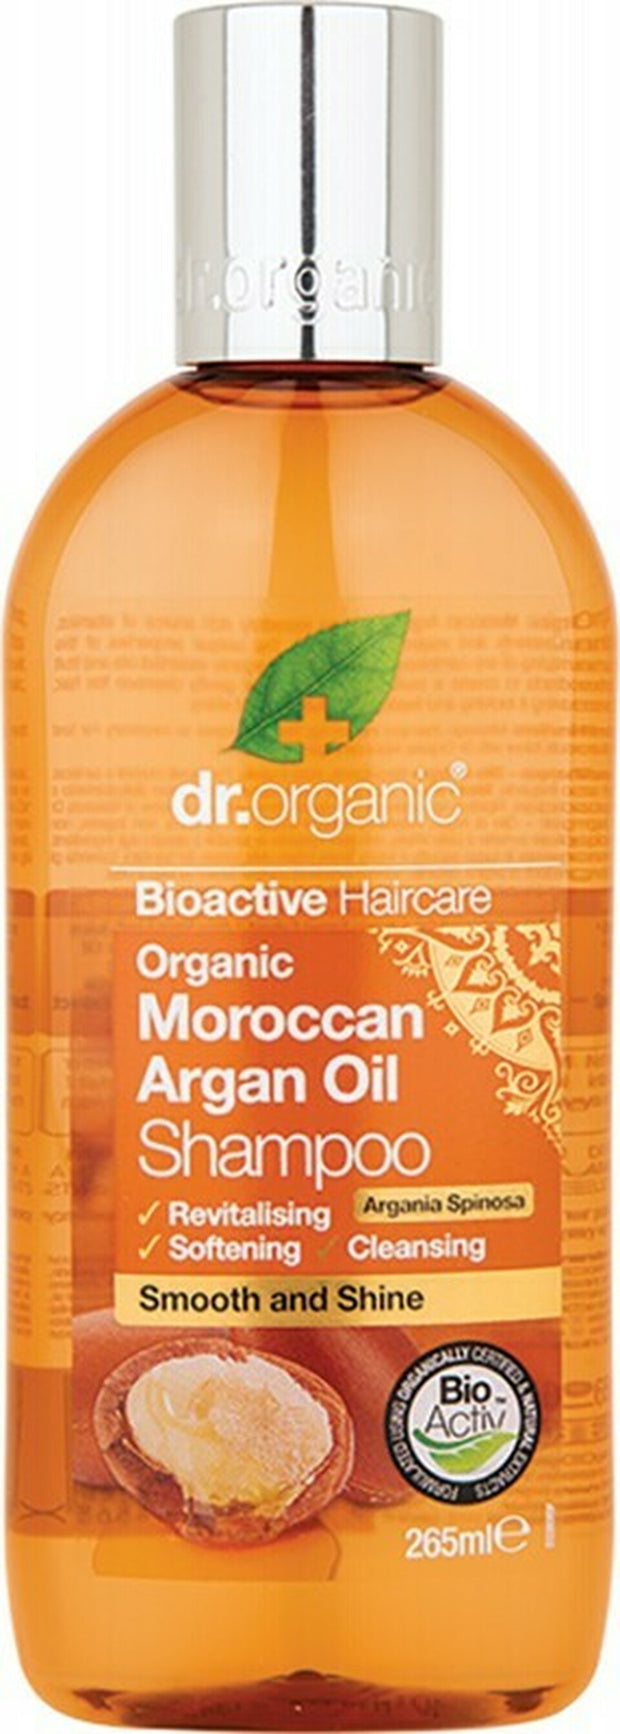 Moroccan Argan Oil Shampoo 265ml Dr Organic